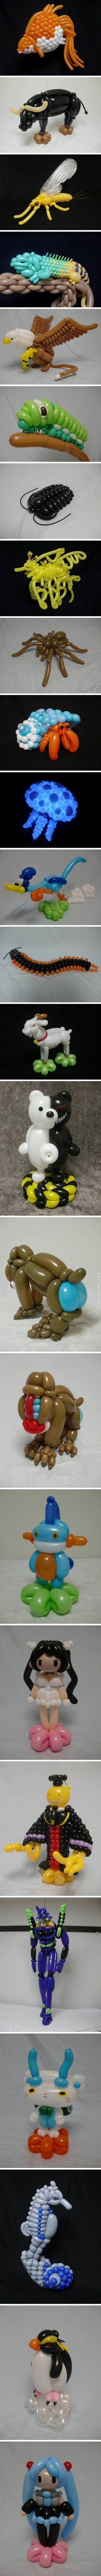 Awesome+balloon+art